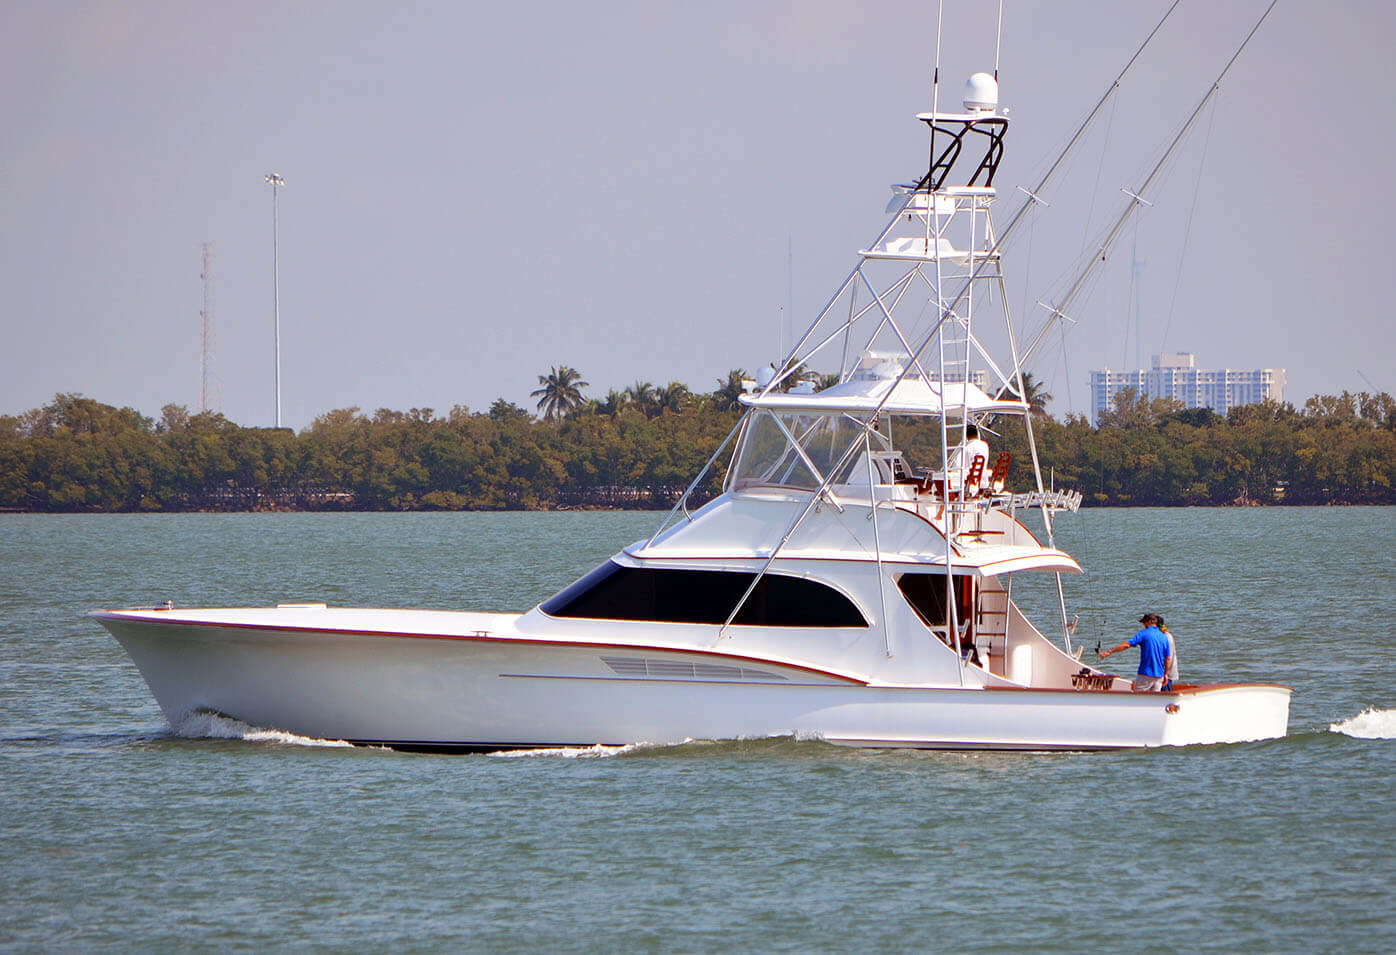 Sport fishing boat cruising slowly on the Florida Intra-Coastal Waterway off Miami Beach